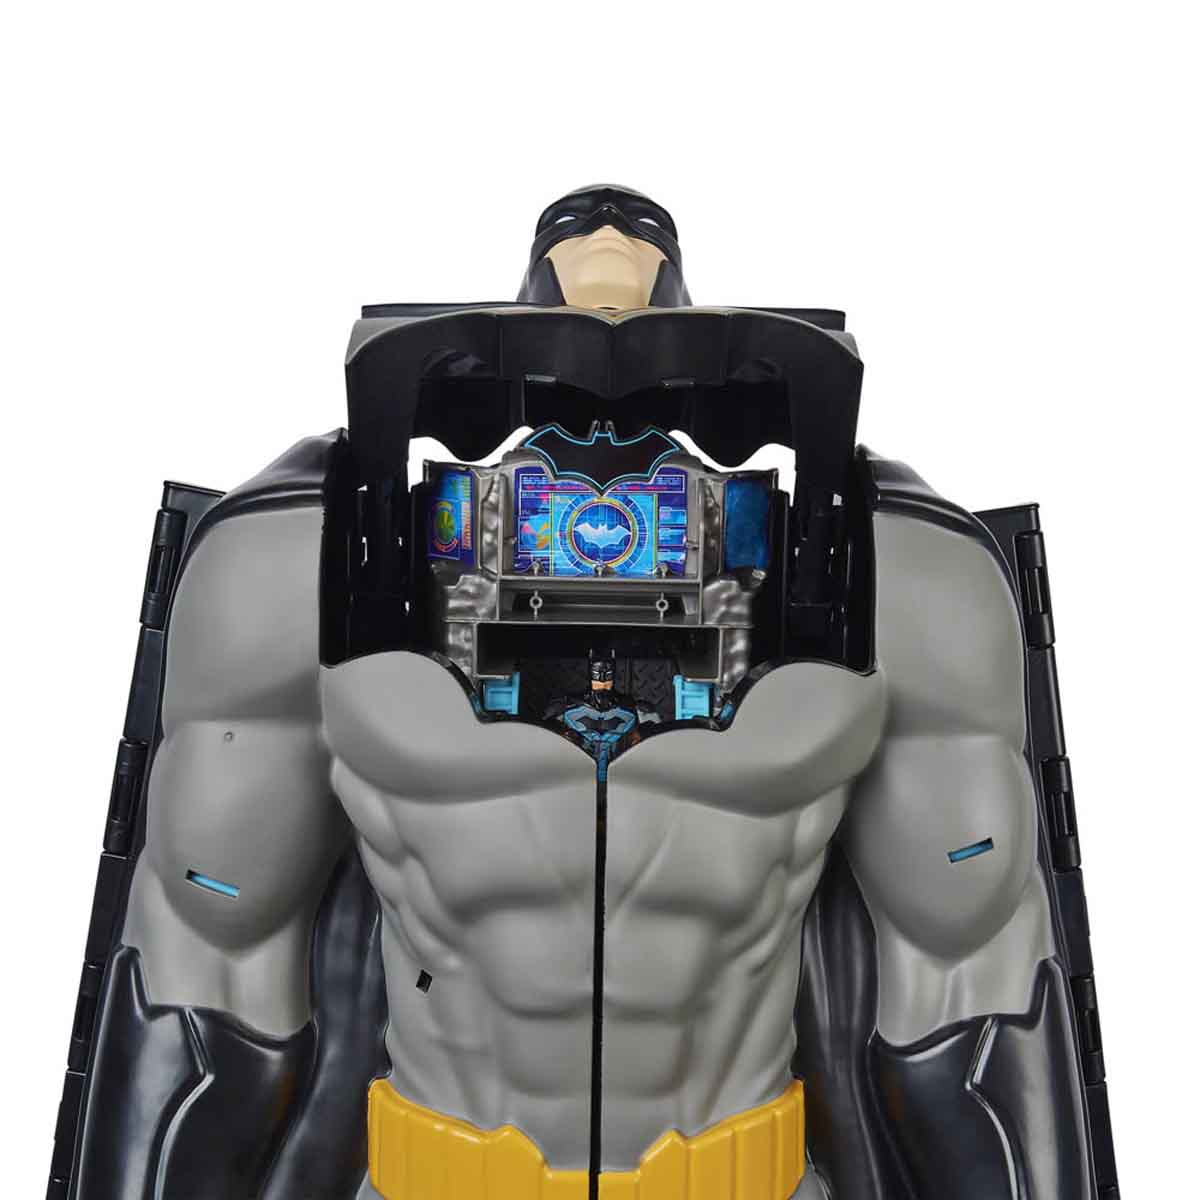 Batman - Playset Batcaverna de Transformação